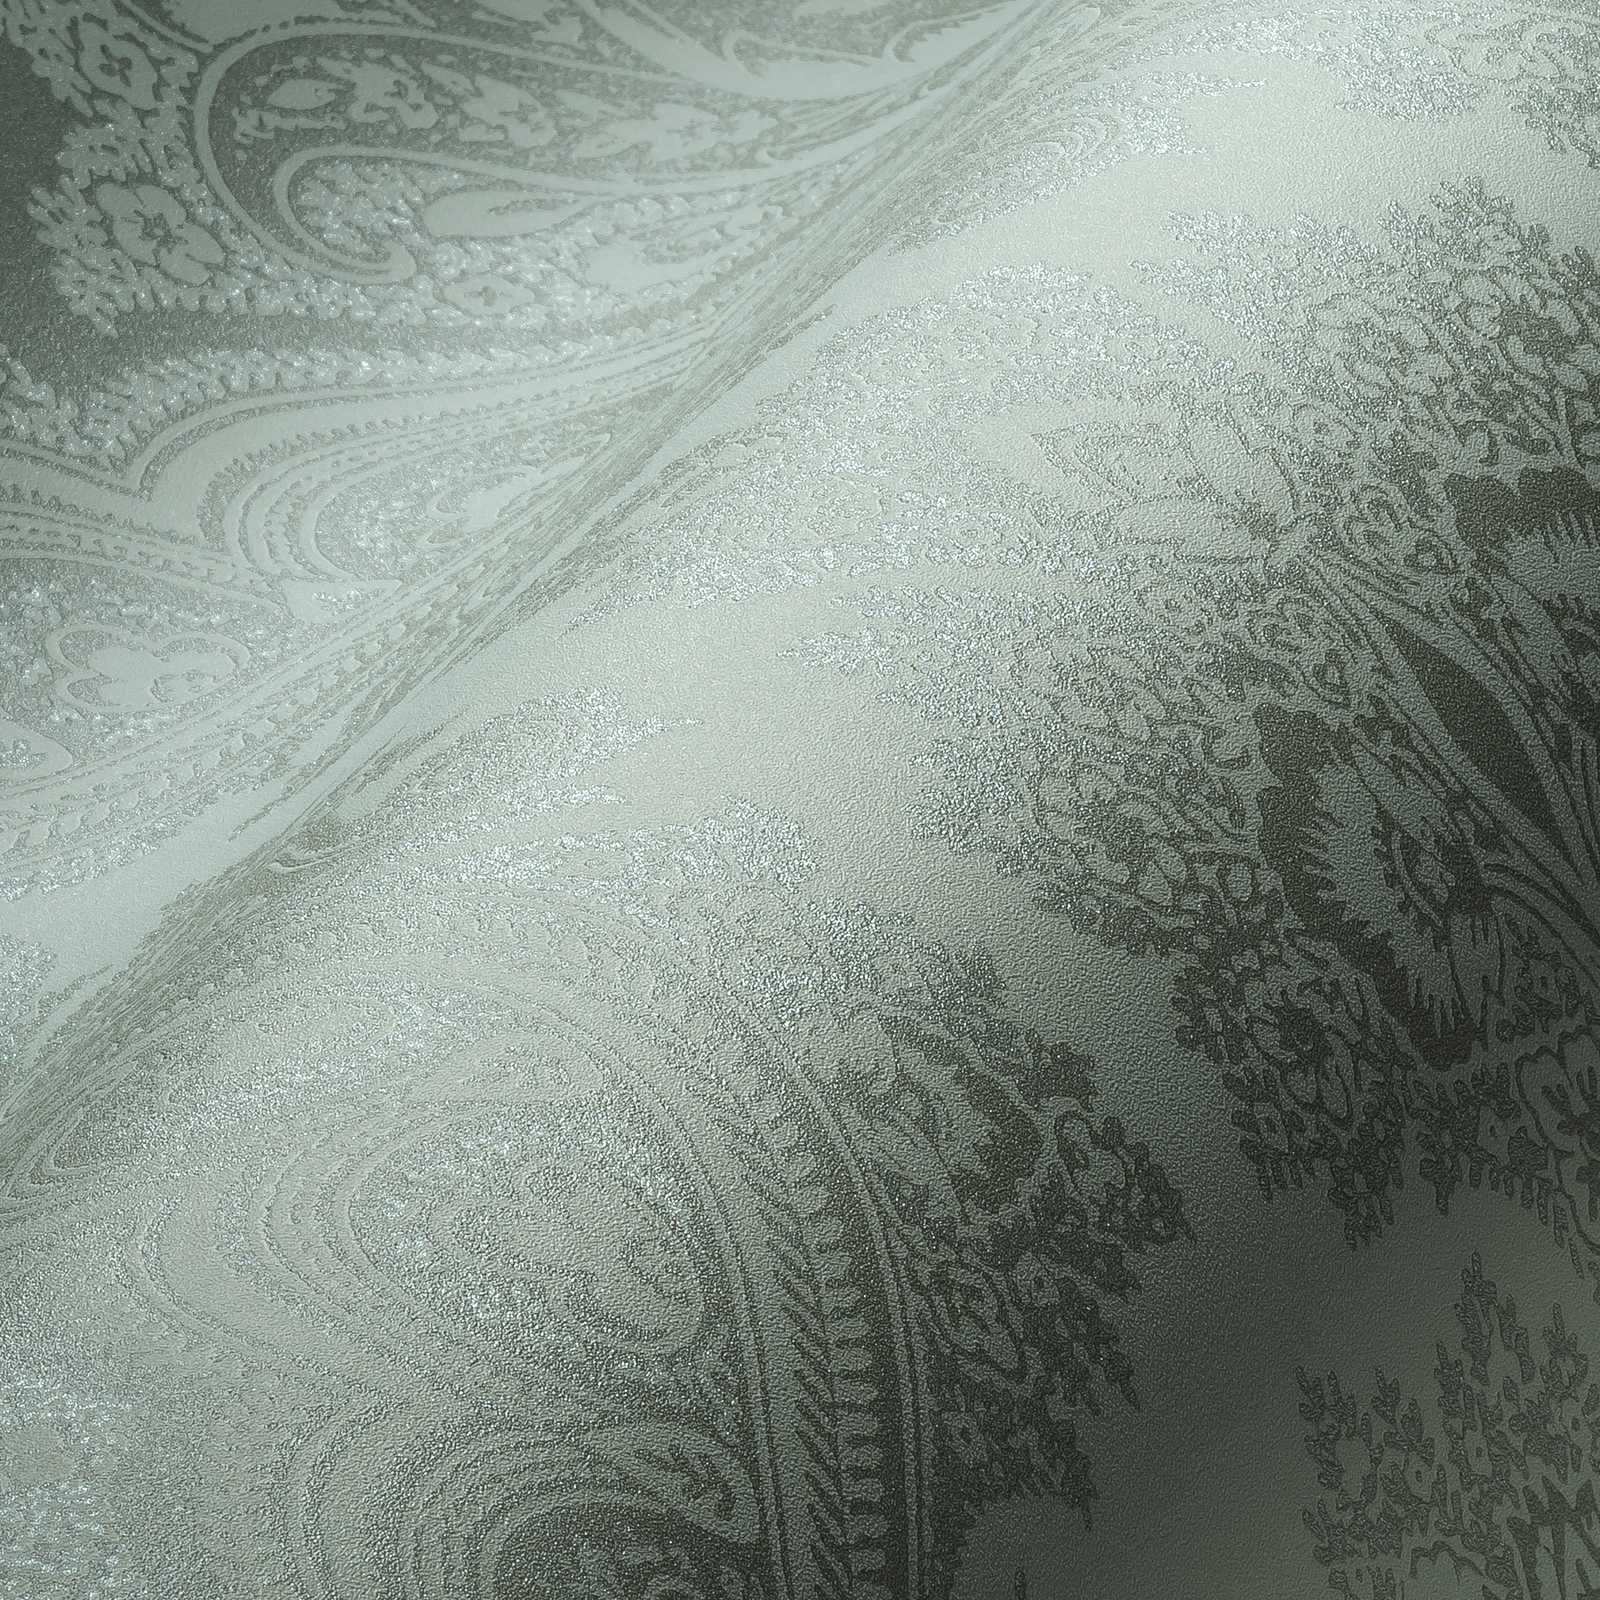             Boho Tapete Mintgrün & Silbergrau mit Ornamentmuster – Metallic, Grün
        